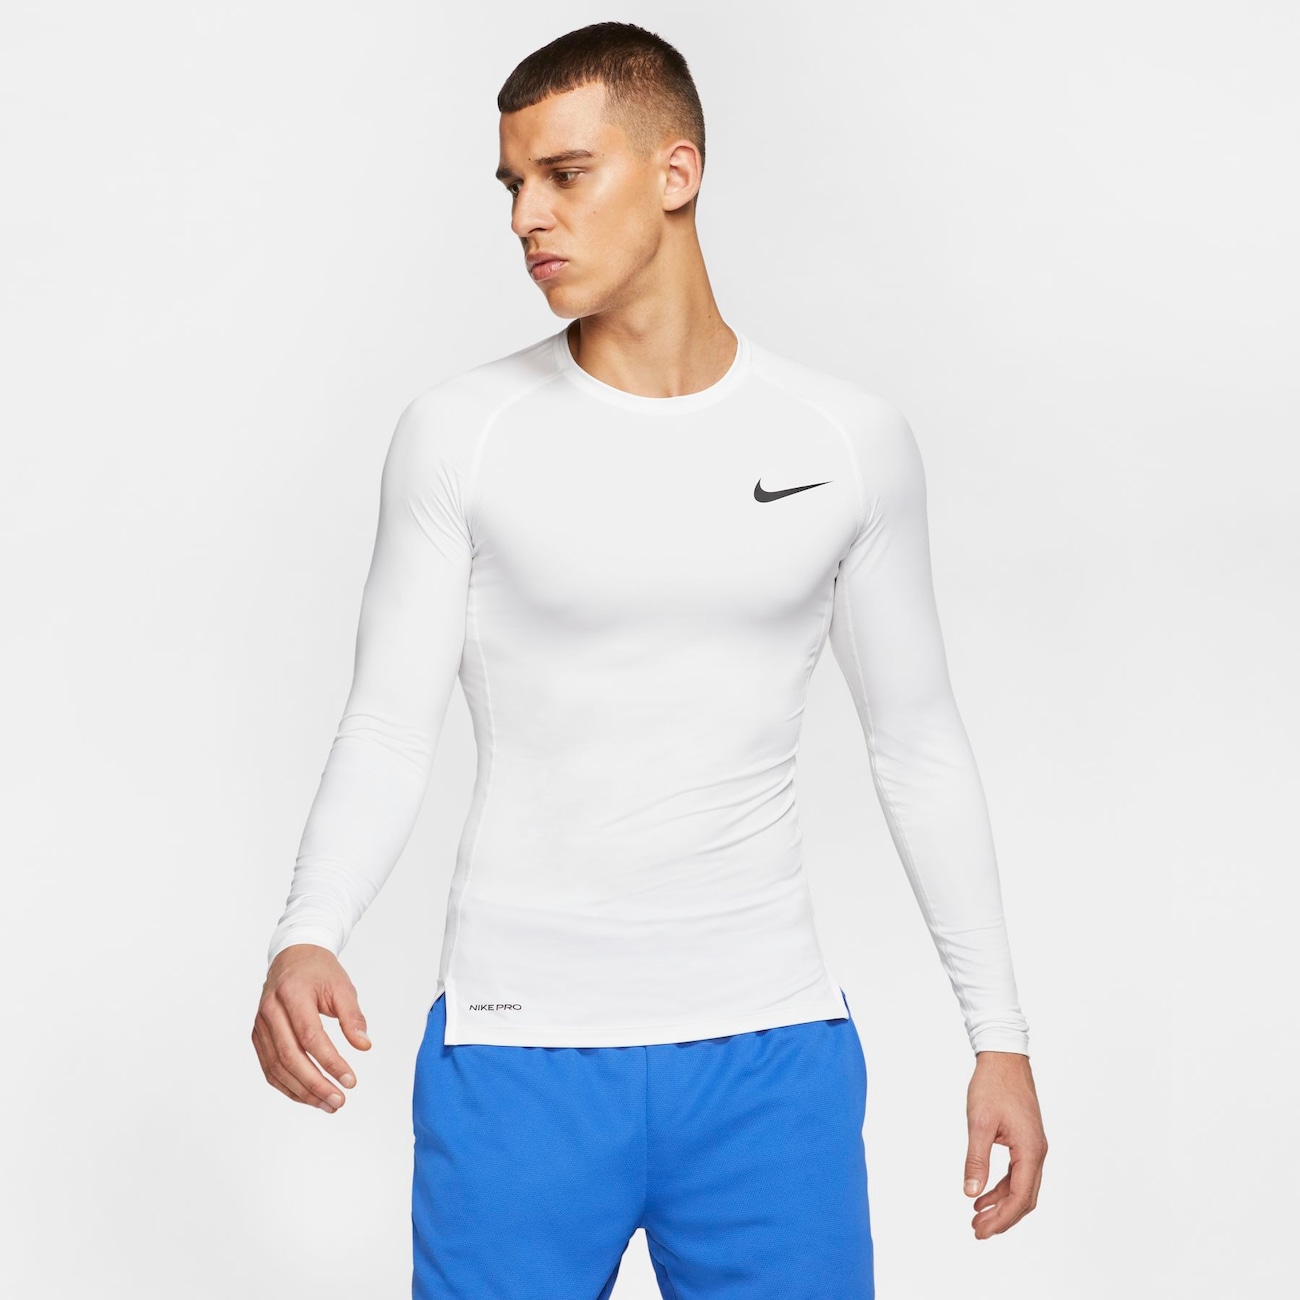 Camiseta Compressão Nike Pro Masculina